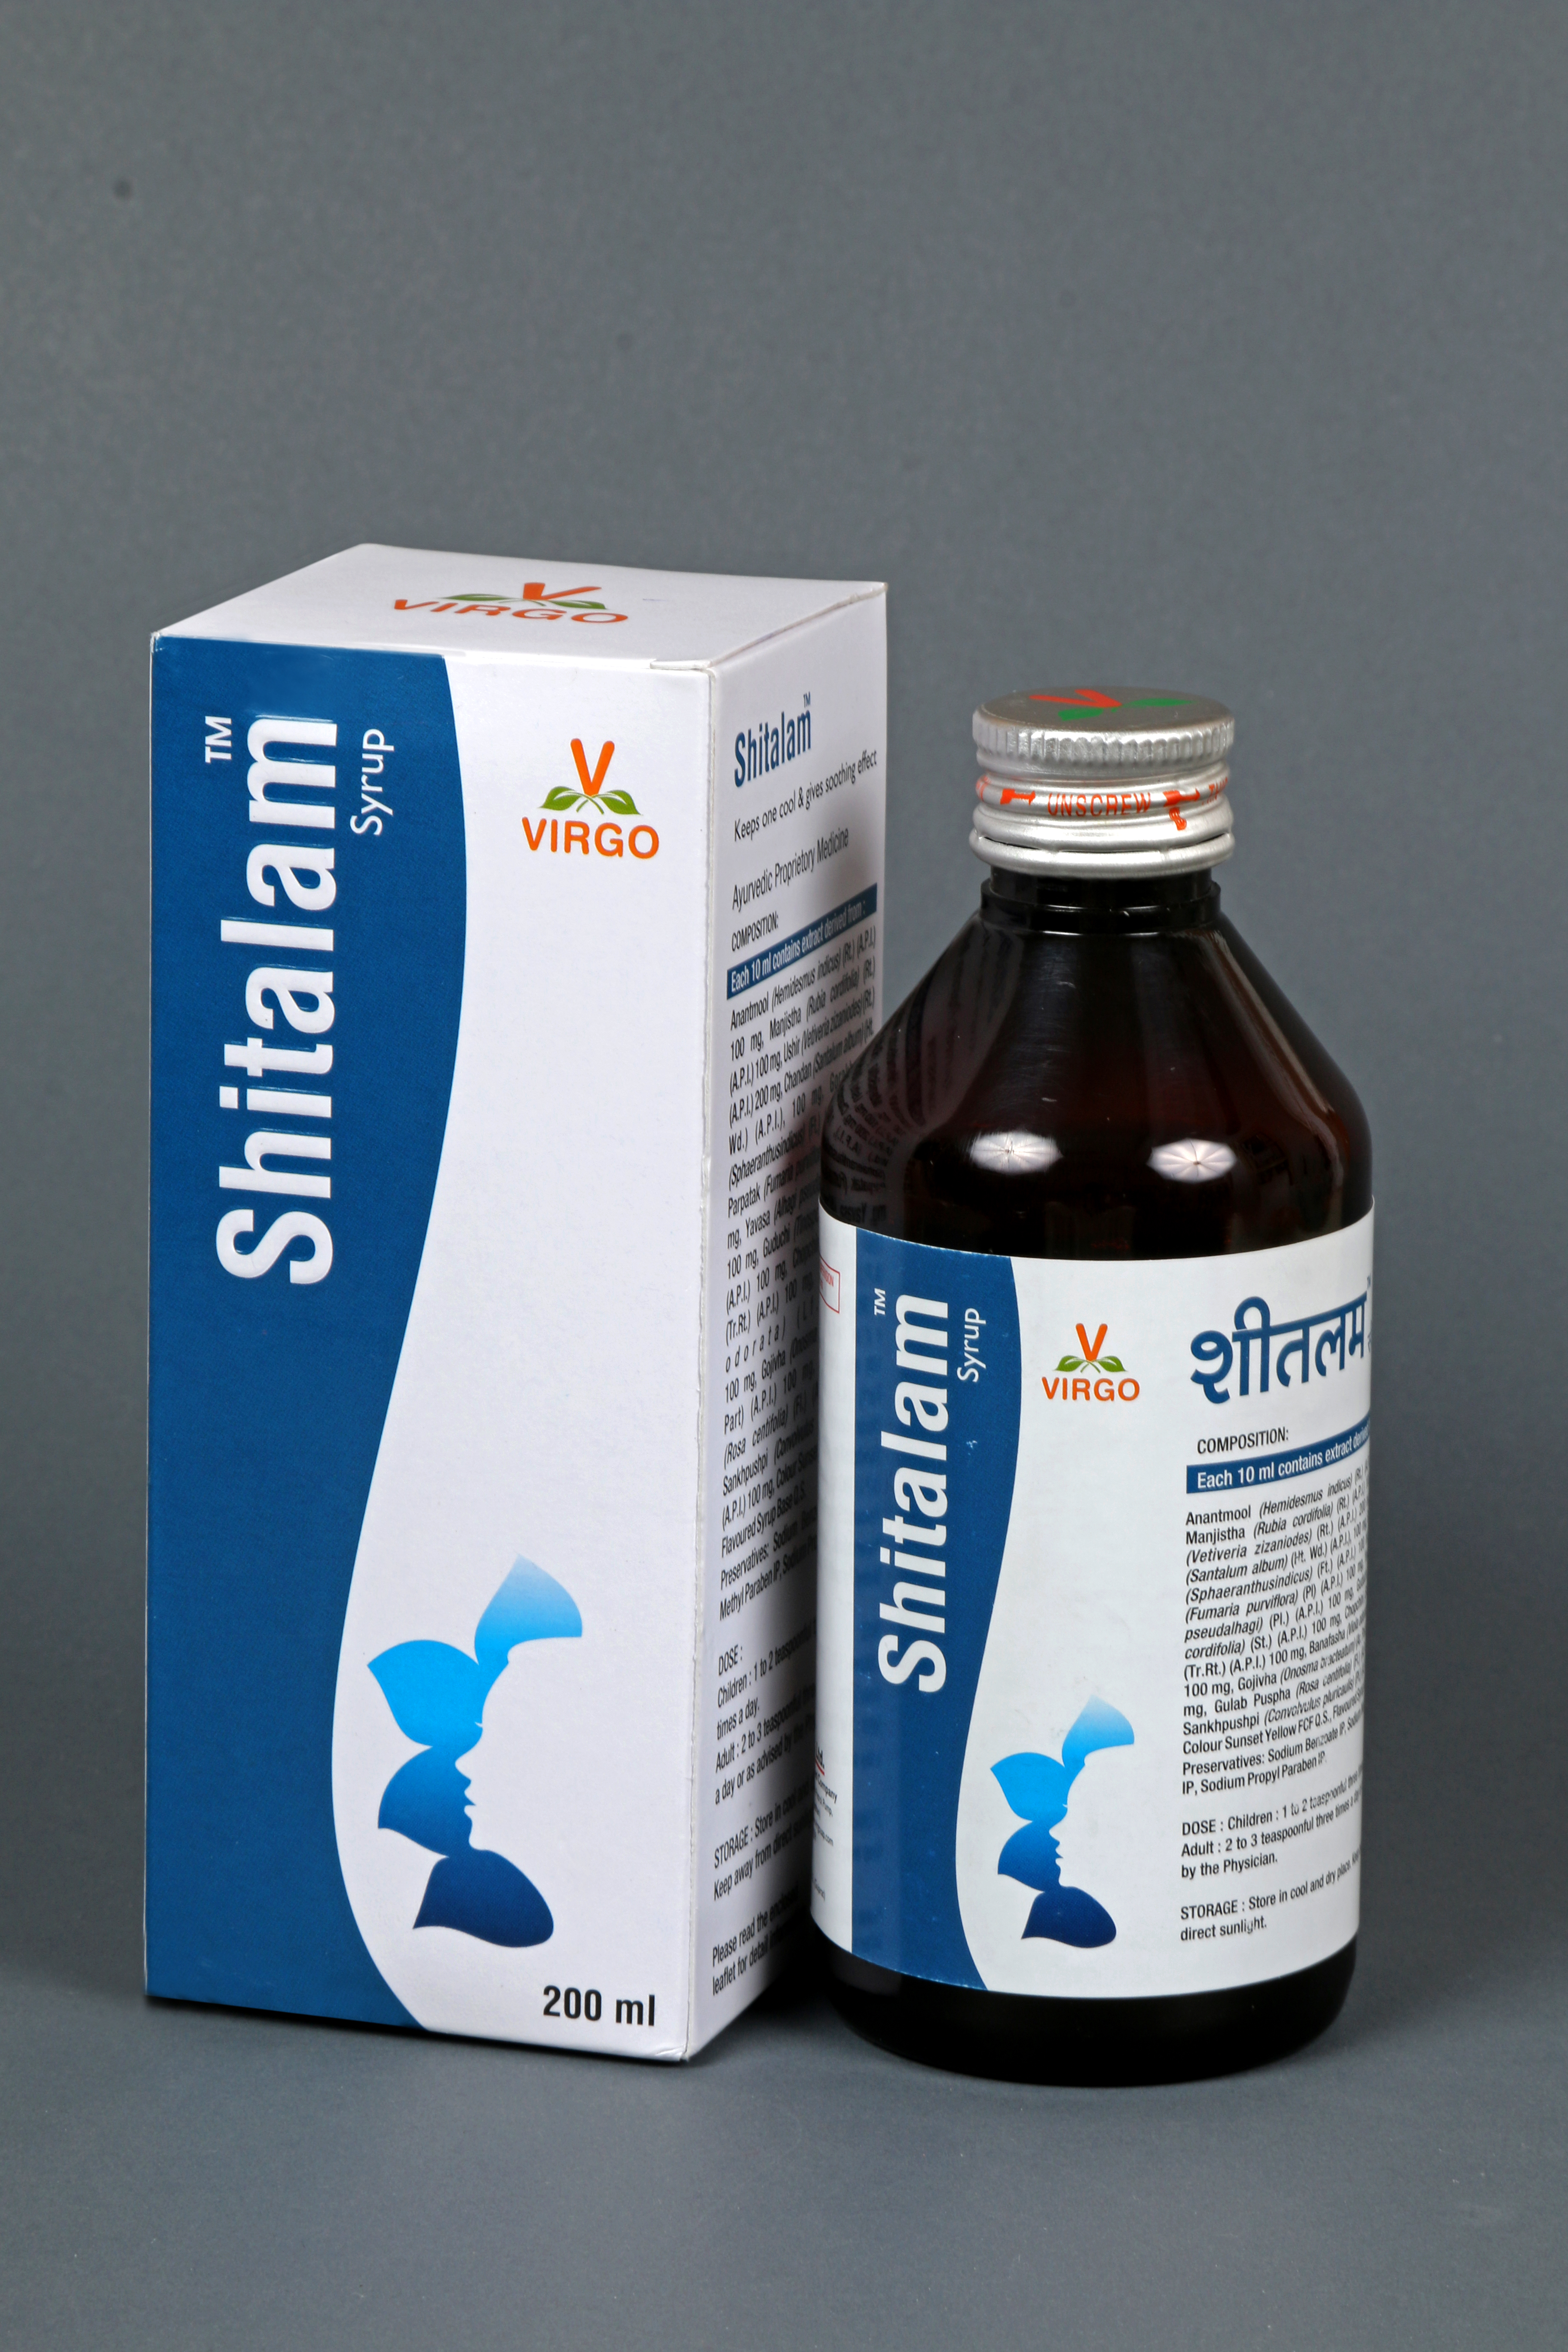 Buy Virgo Shitalam Syrup at Best Price Online